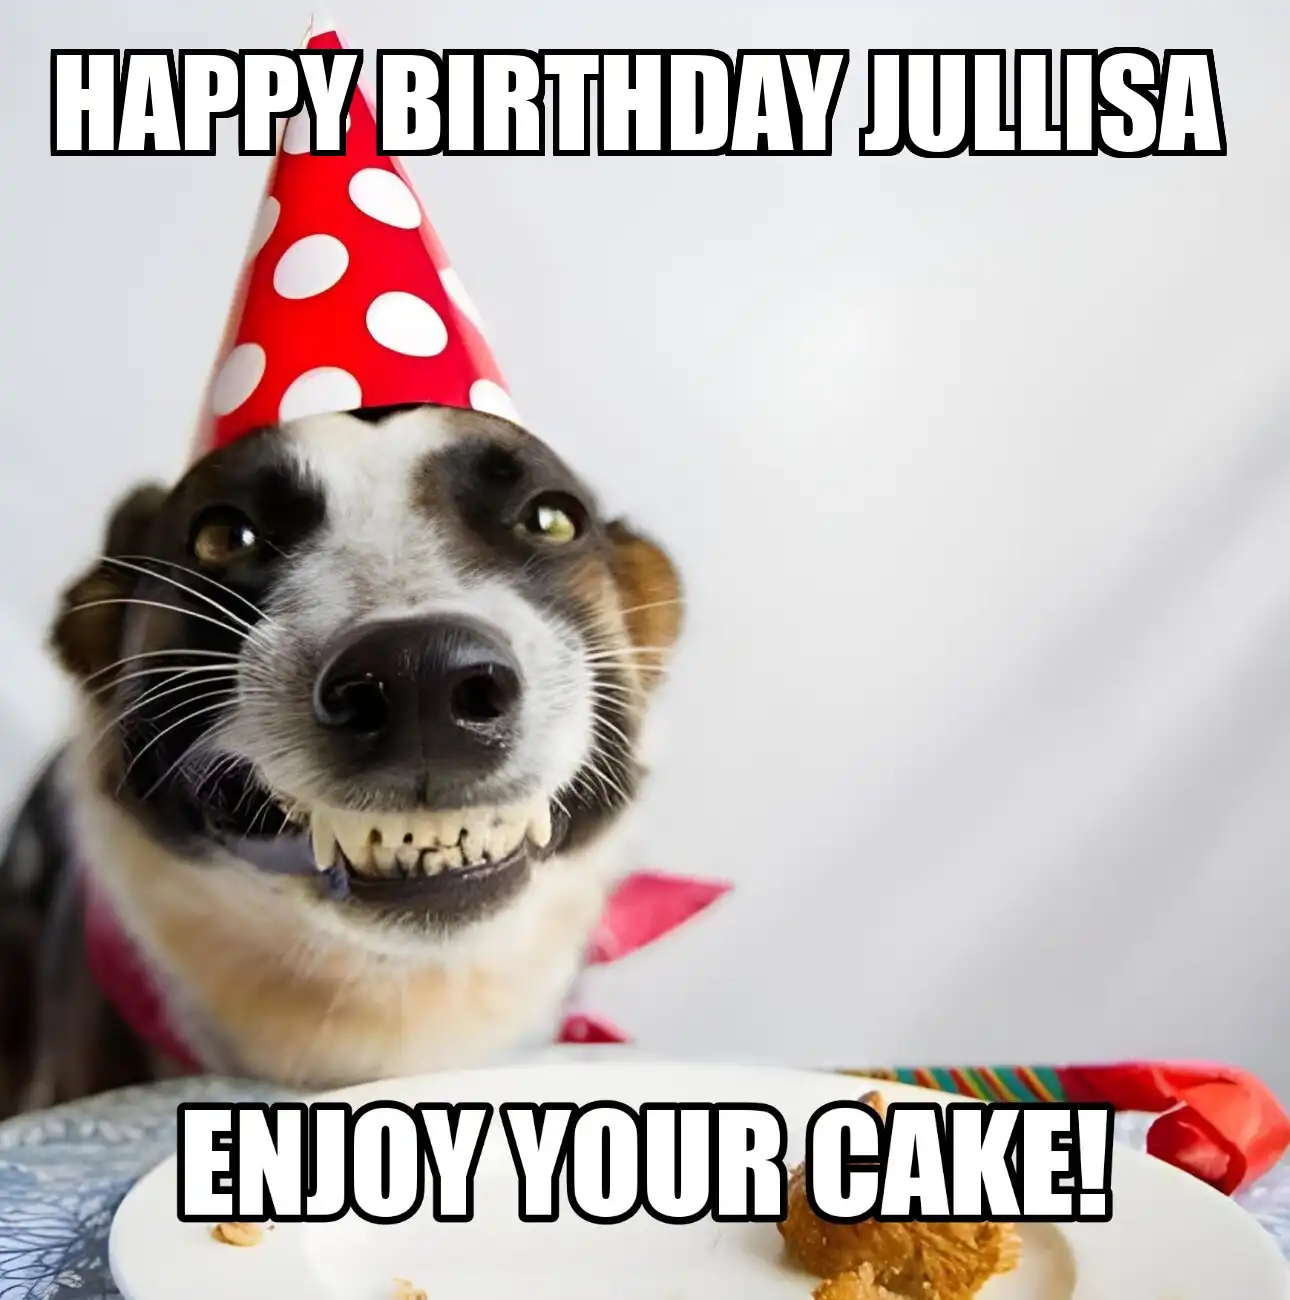 Happy Birthday Jullisa Enjoy Your Cake Dog Meme